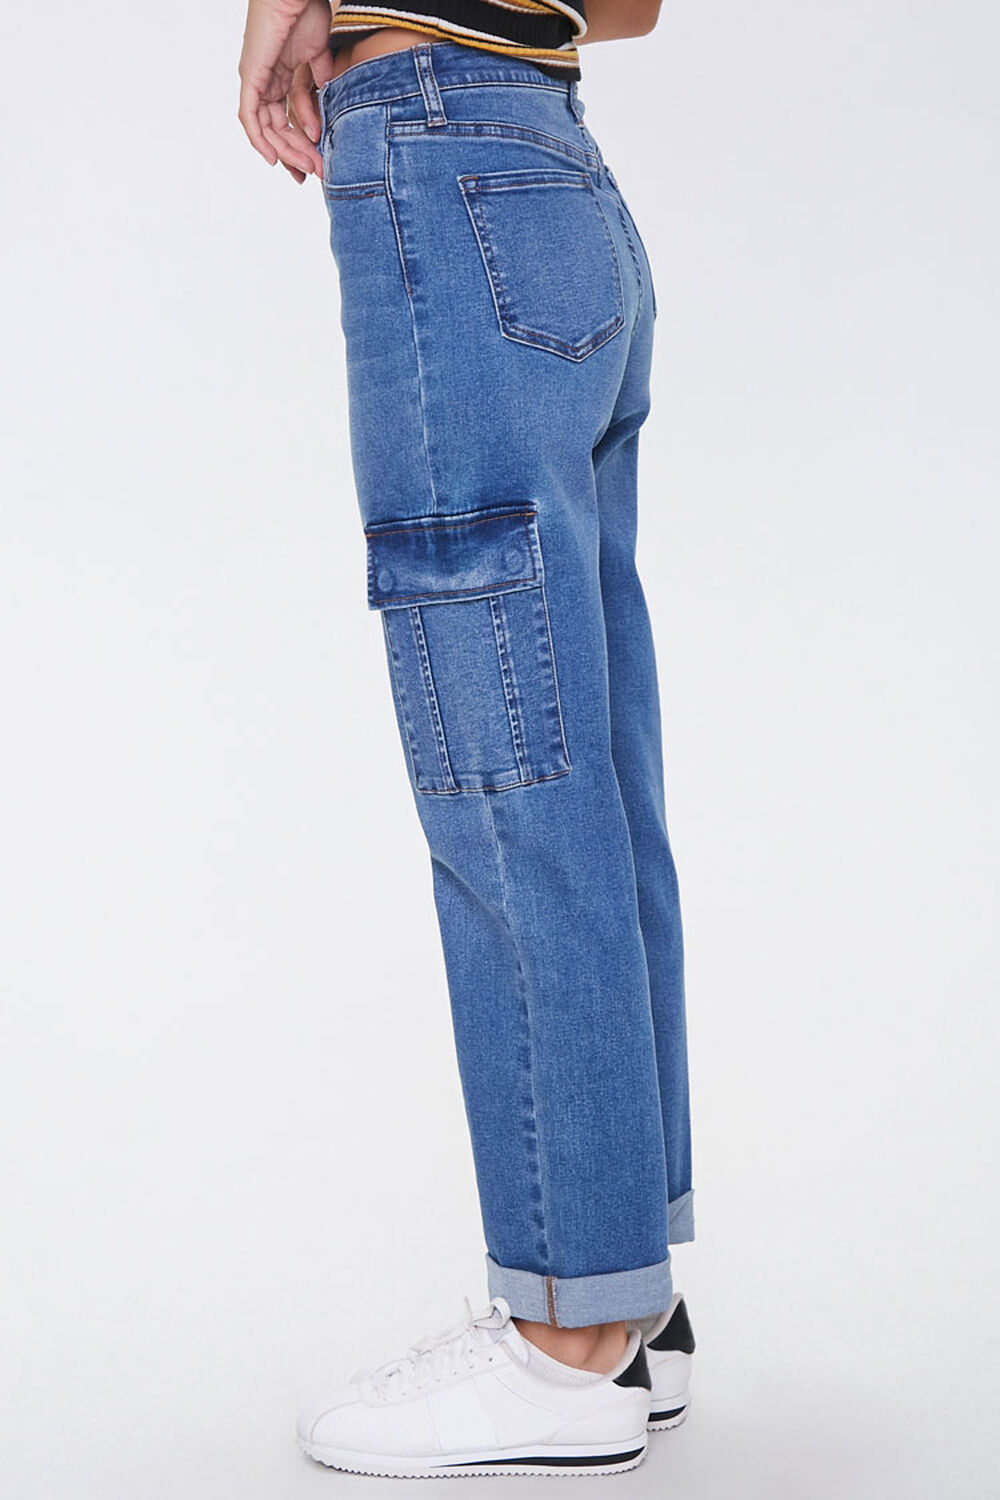 MEDIUM DENIM Recycled Cargo Skinny Jeans, image 3